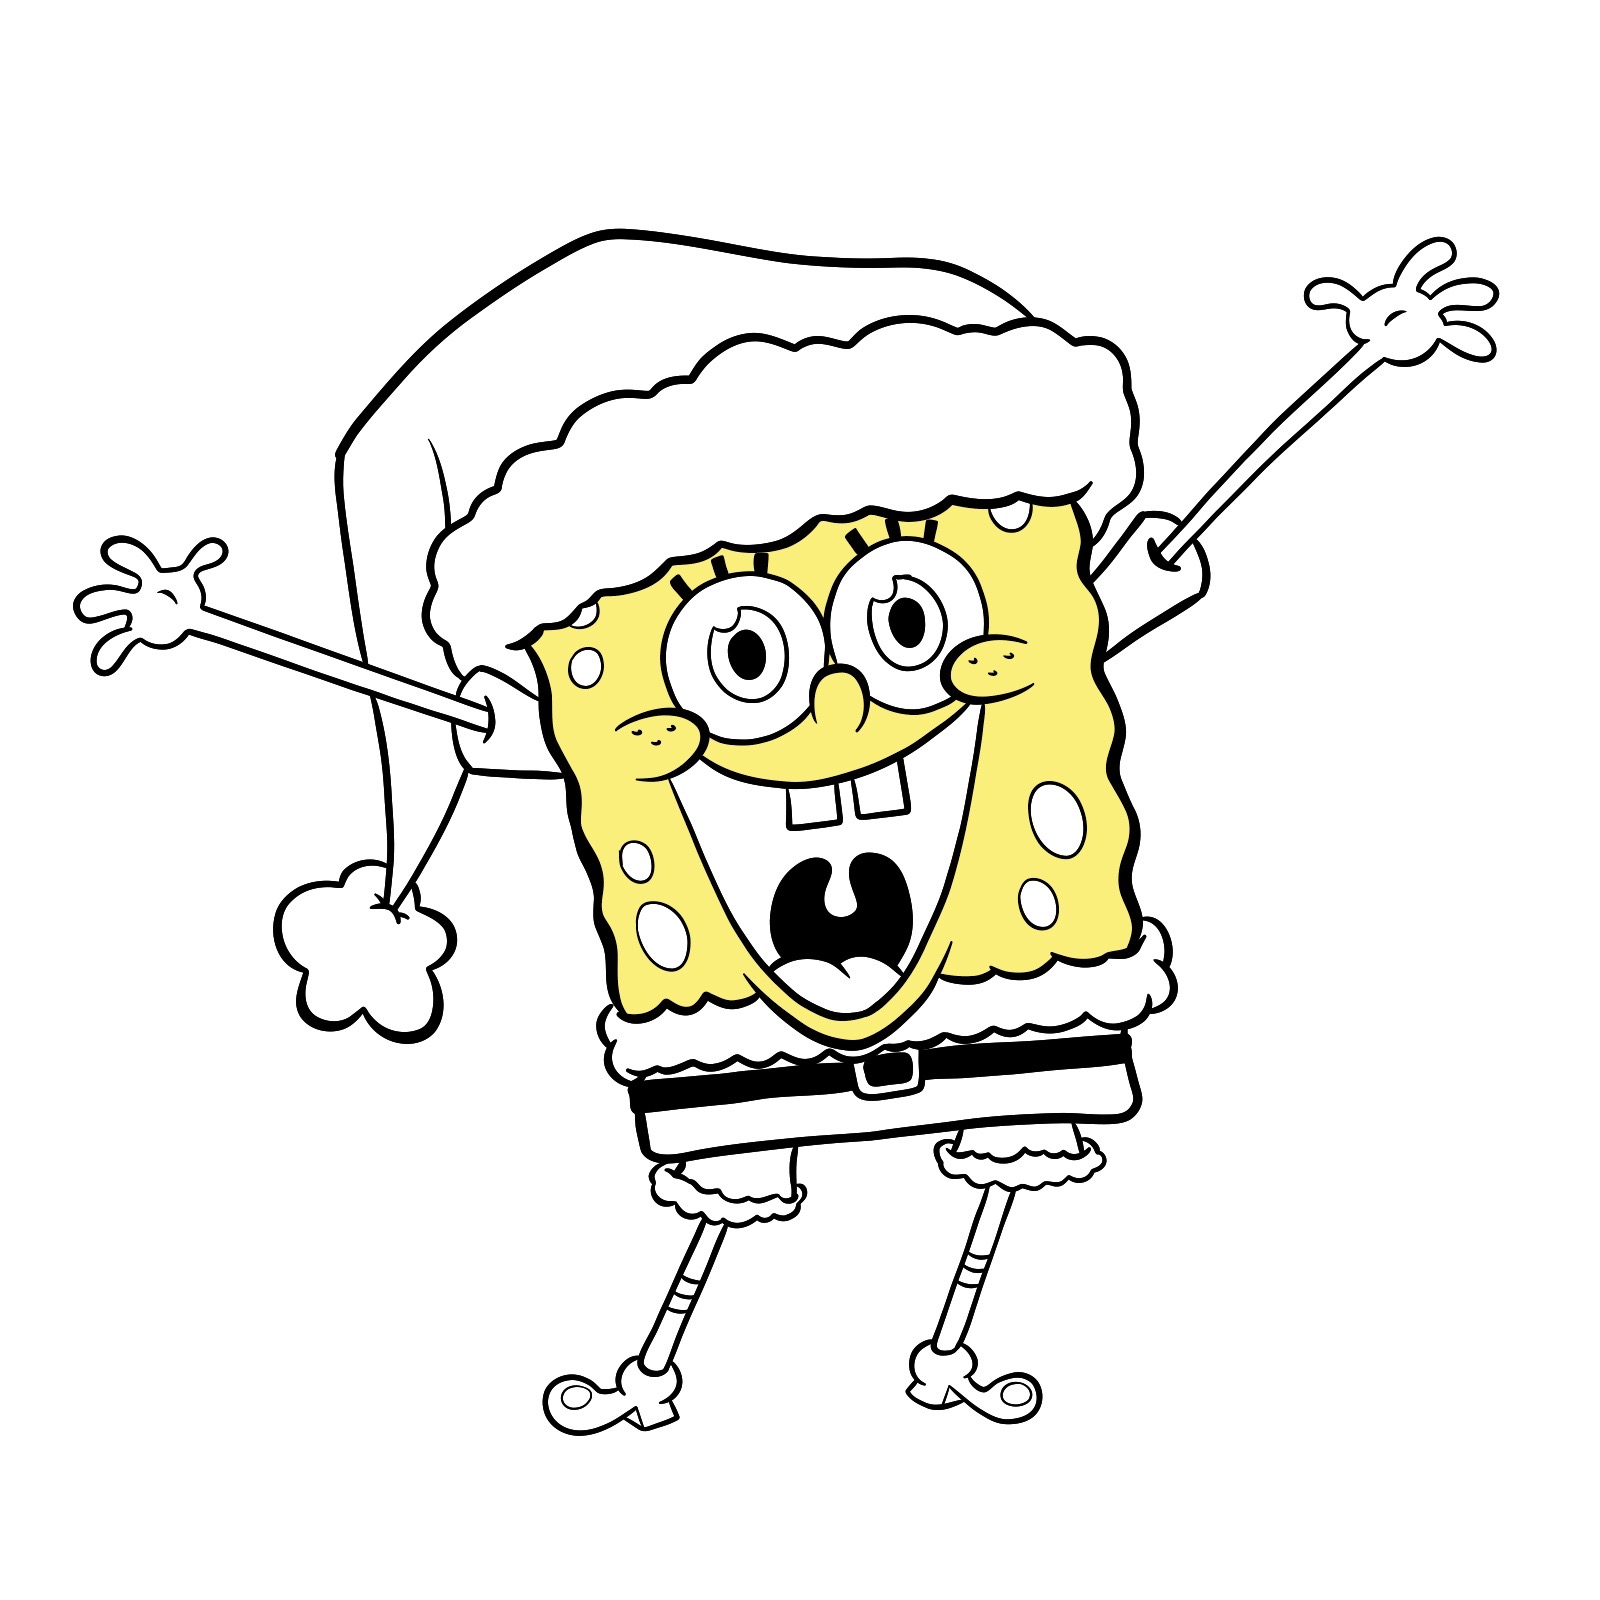 How to draw Santa SpongeBob SquarePants - step 28